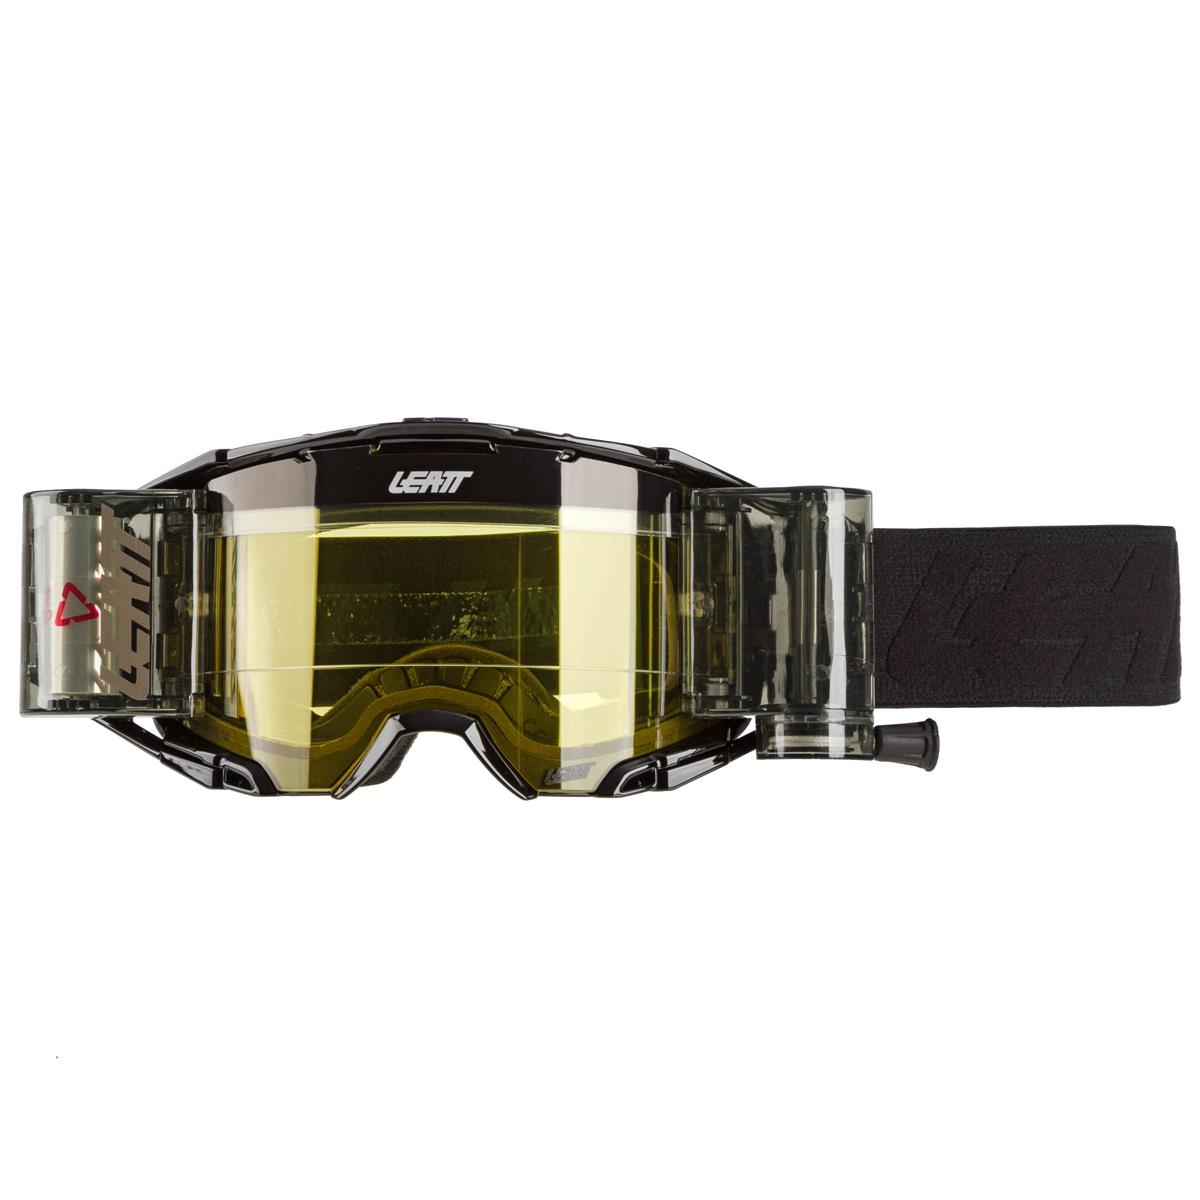 Leatt Crossbrille Velocity 6.5 mit Roll Off System, Schwarz/Grau - Gelb